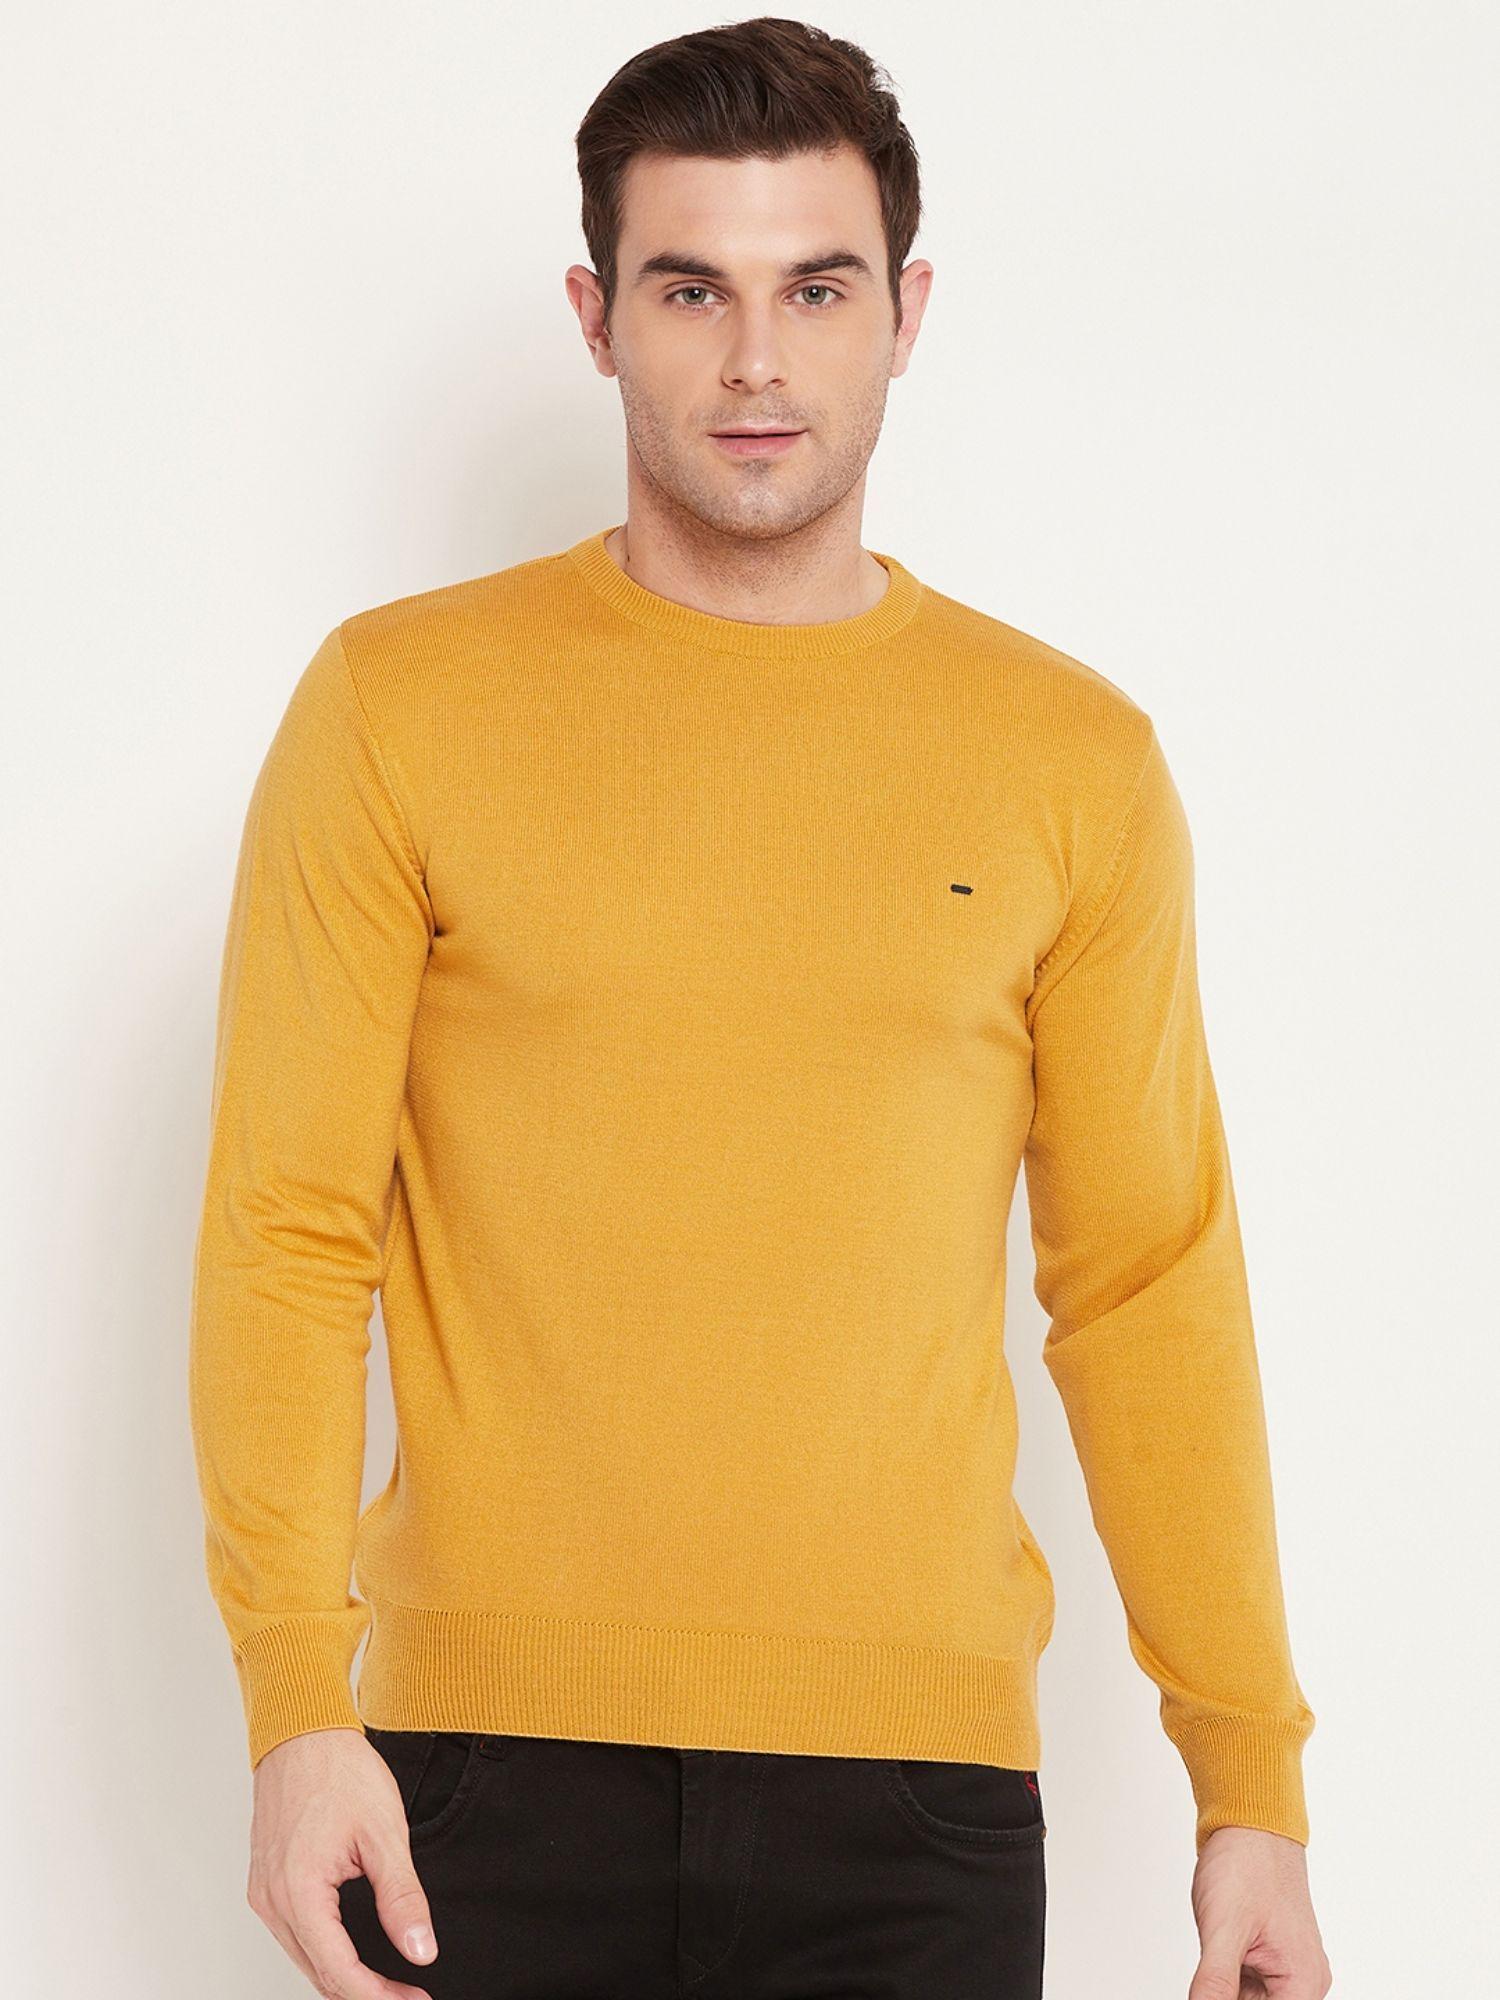 mens-mustard-round-neck-sweaters